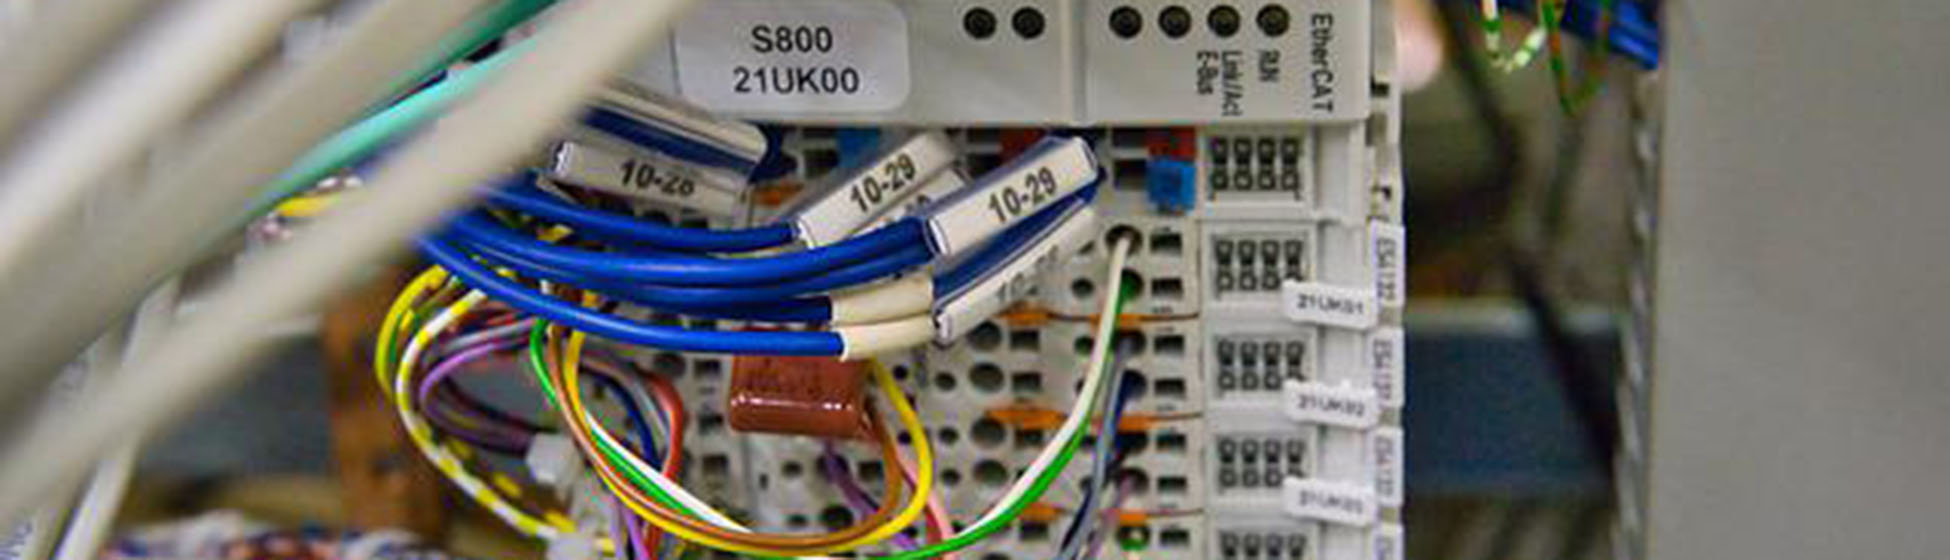 Installation electrique courant faible